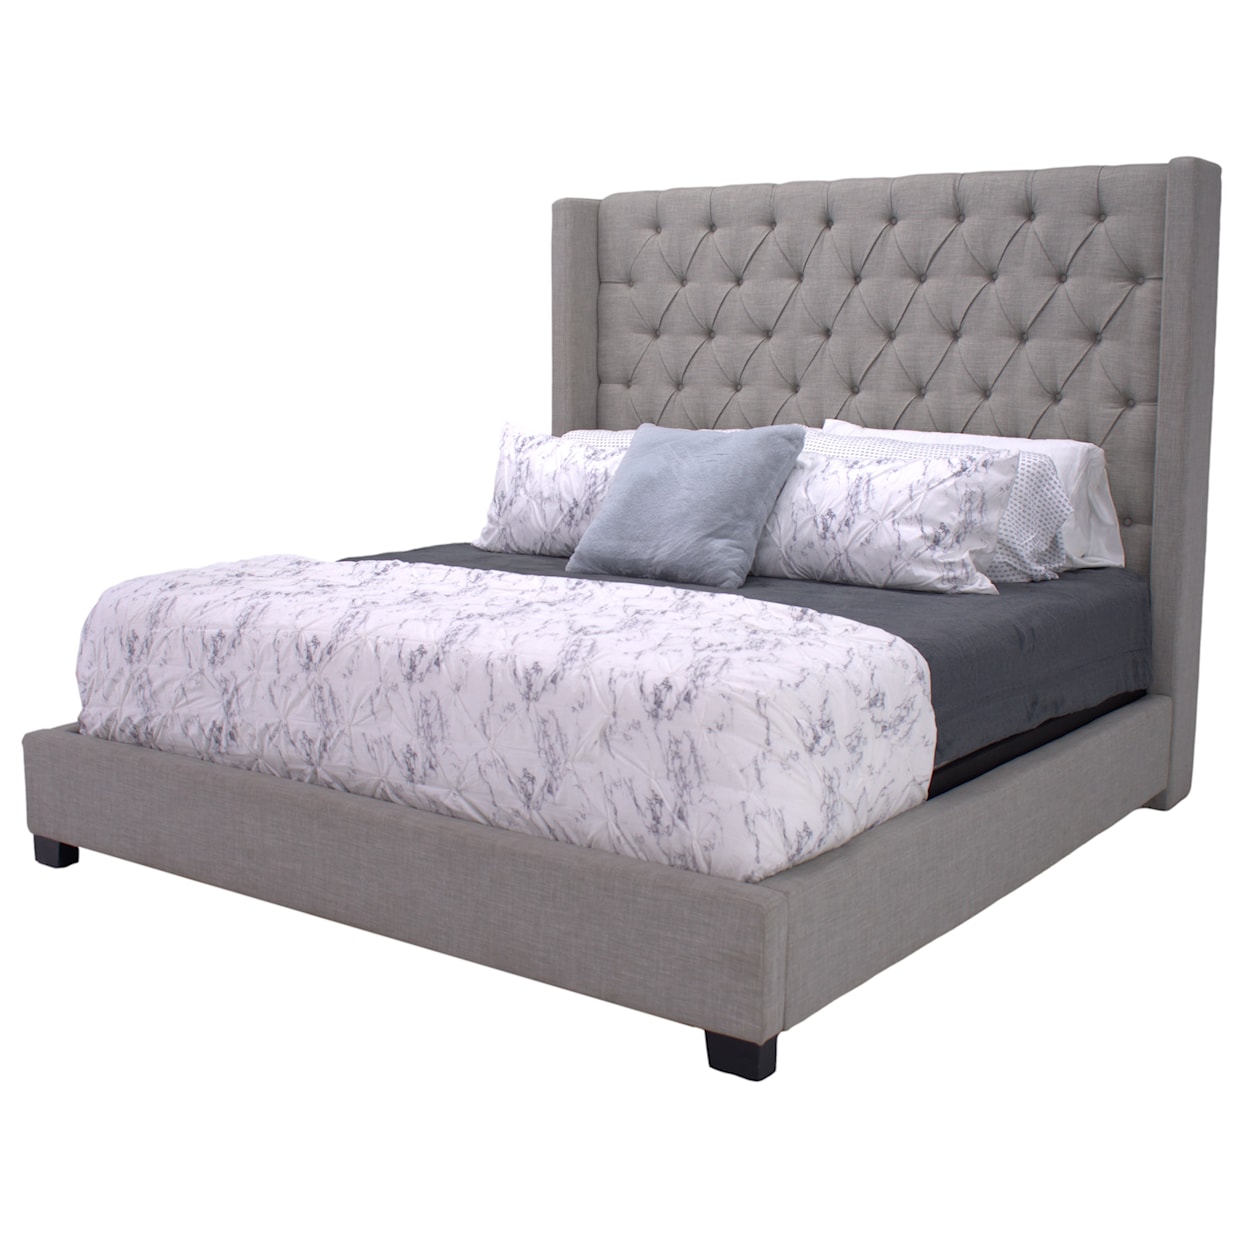 Standard Furniture Katy Katy King Bed